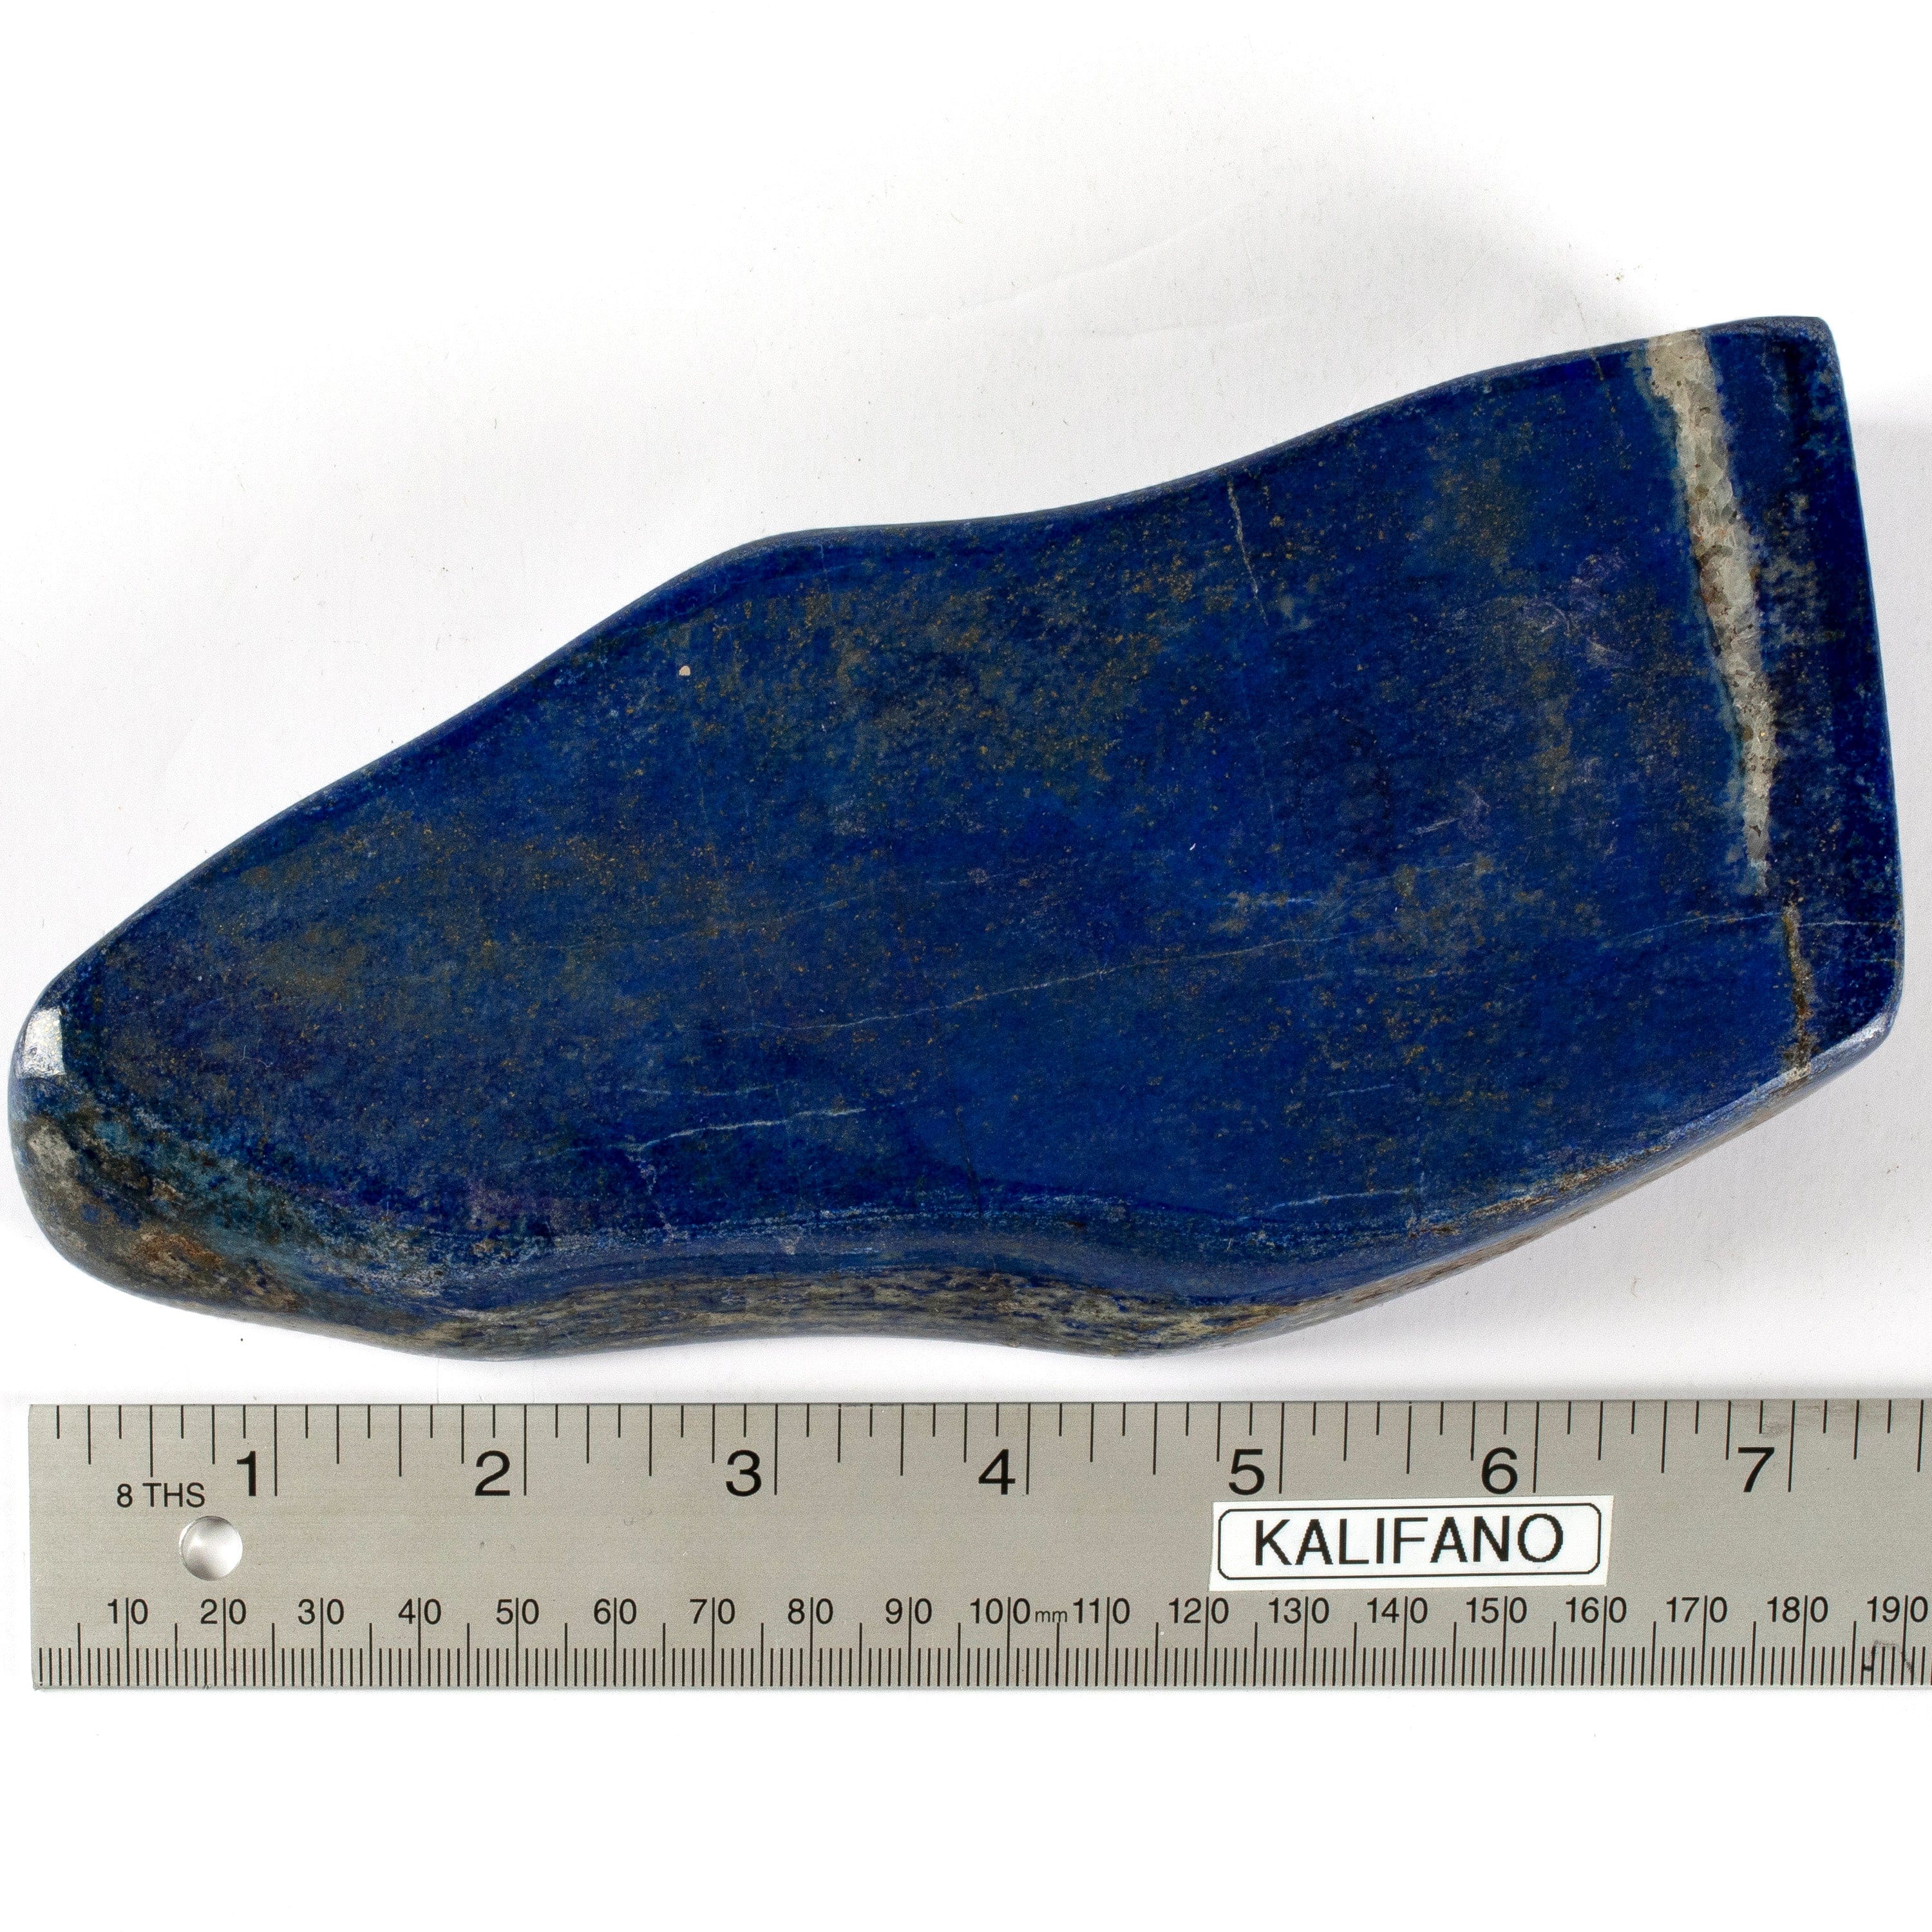 Kalifano Lapis Lapis Lazuli Freeform from Afghanistan - 7.5" / 873 grams LP900.013